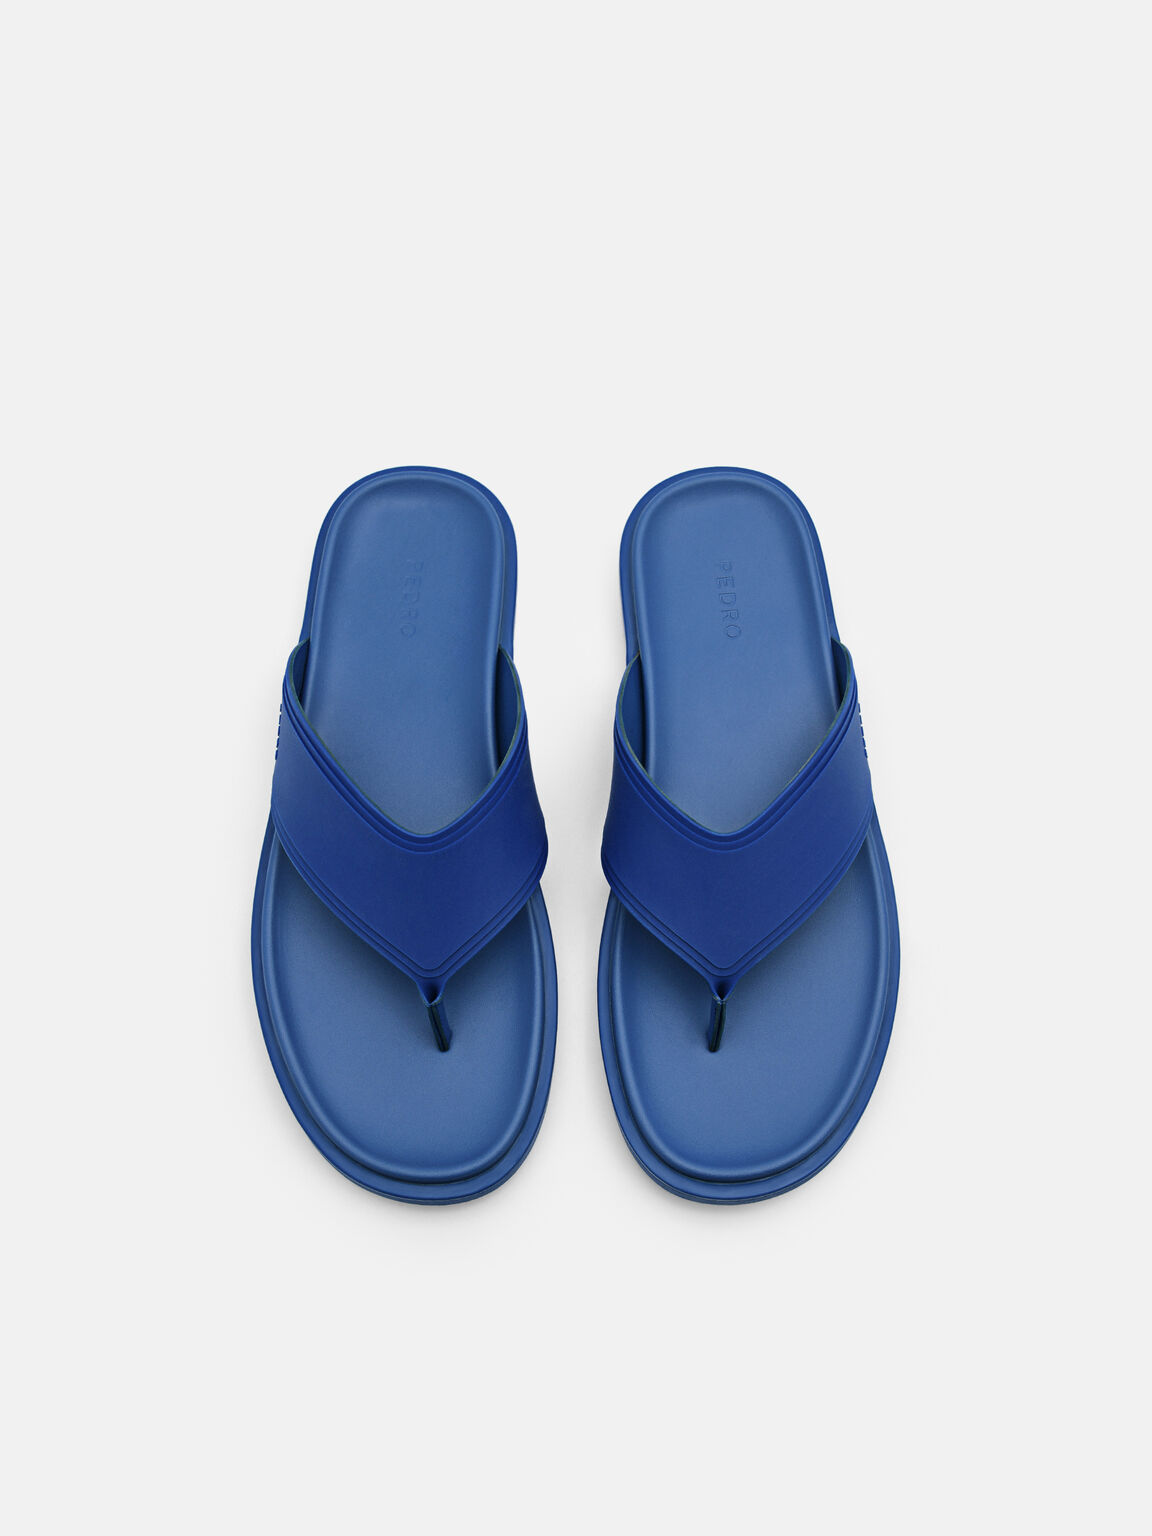 Pascal Thong Sandals, Blue